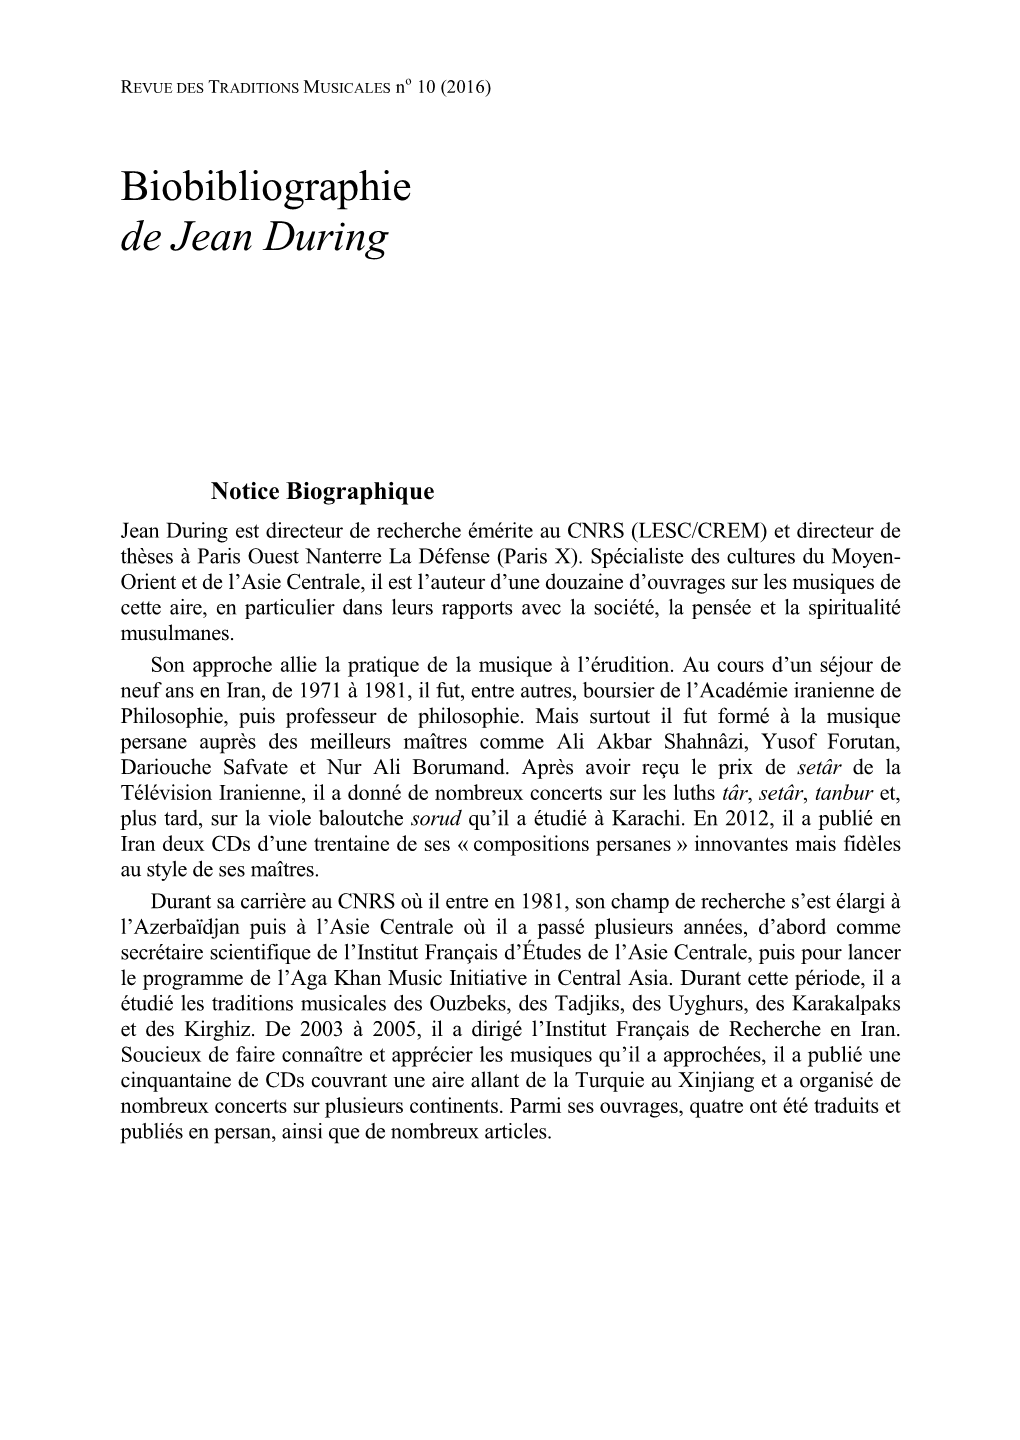 DURING, Jean, 2016, « Bibliographie », Revue Des